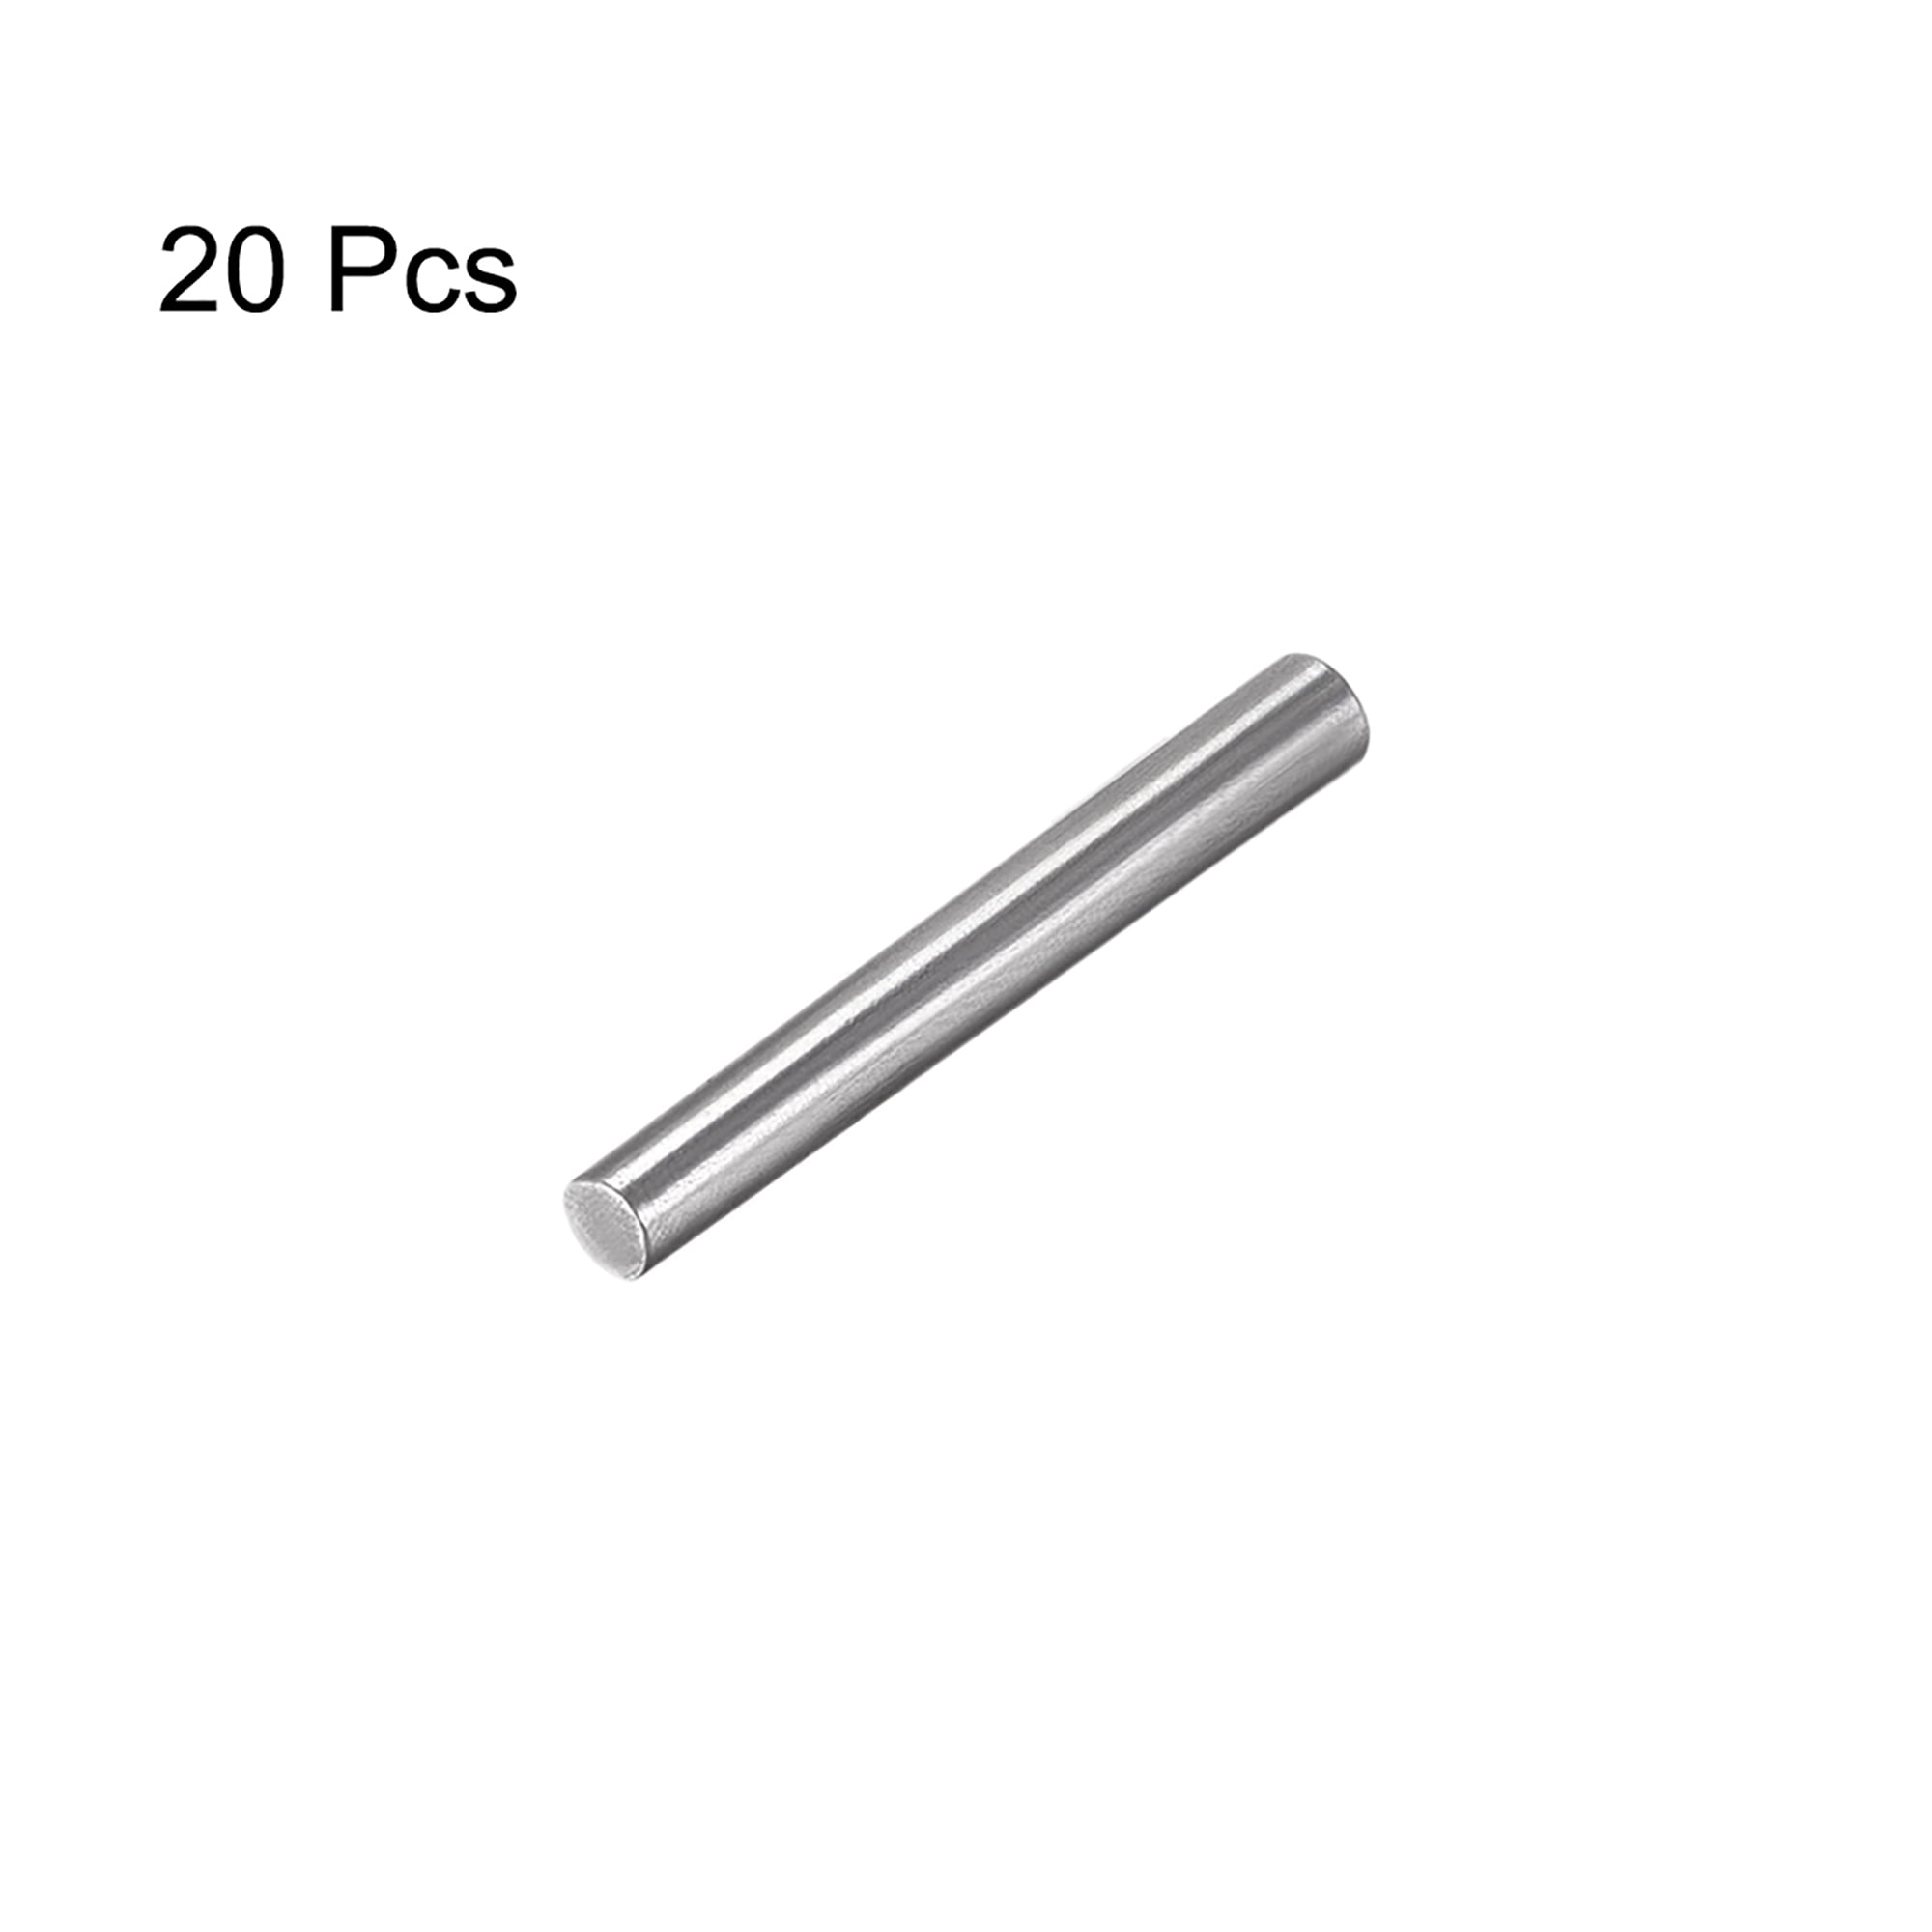 20 Pcs 3mm Small End Diameter 45mm Length GB117 Carbon Steel Taper Pin 